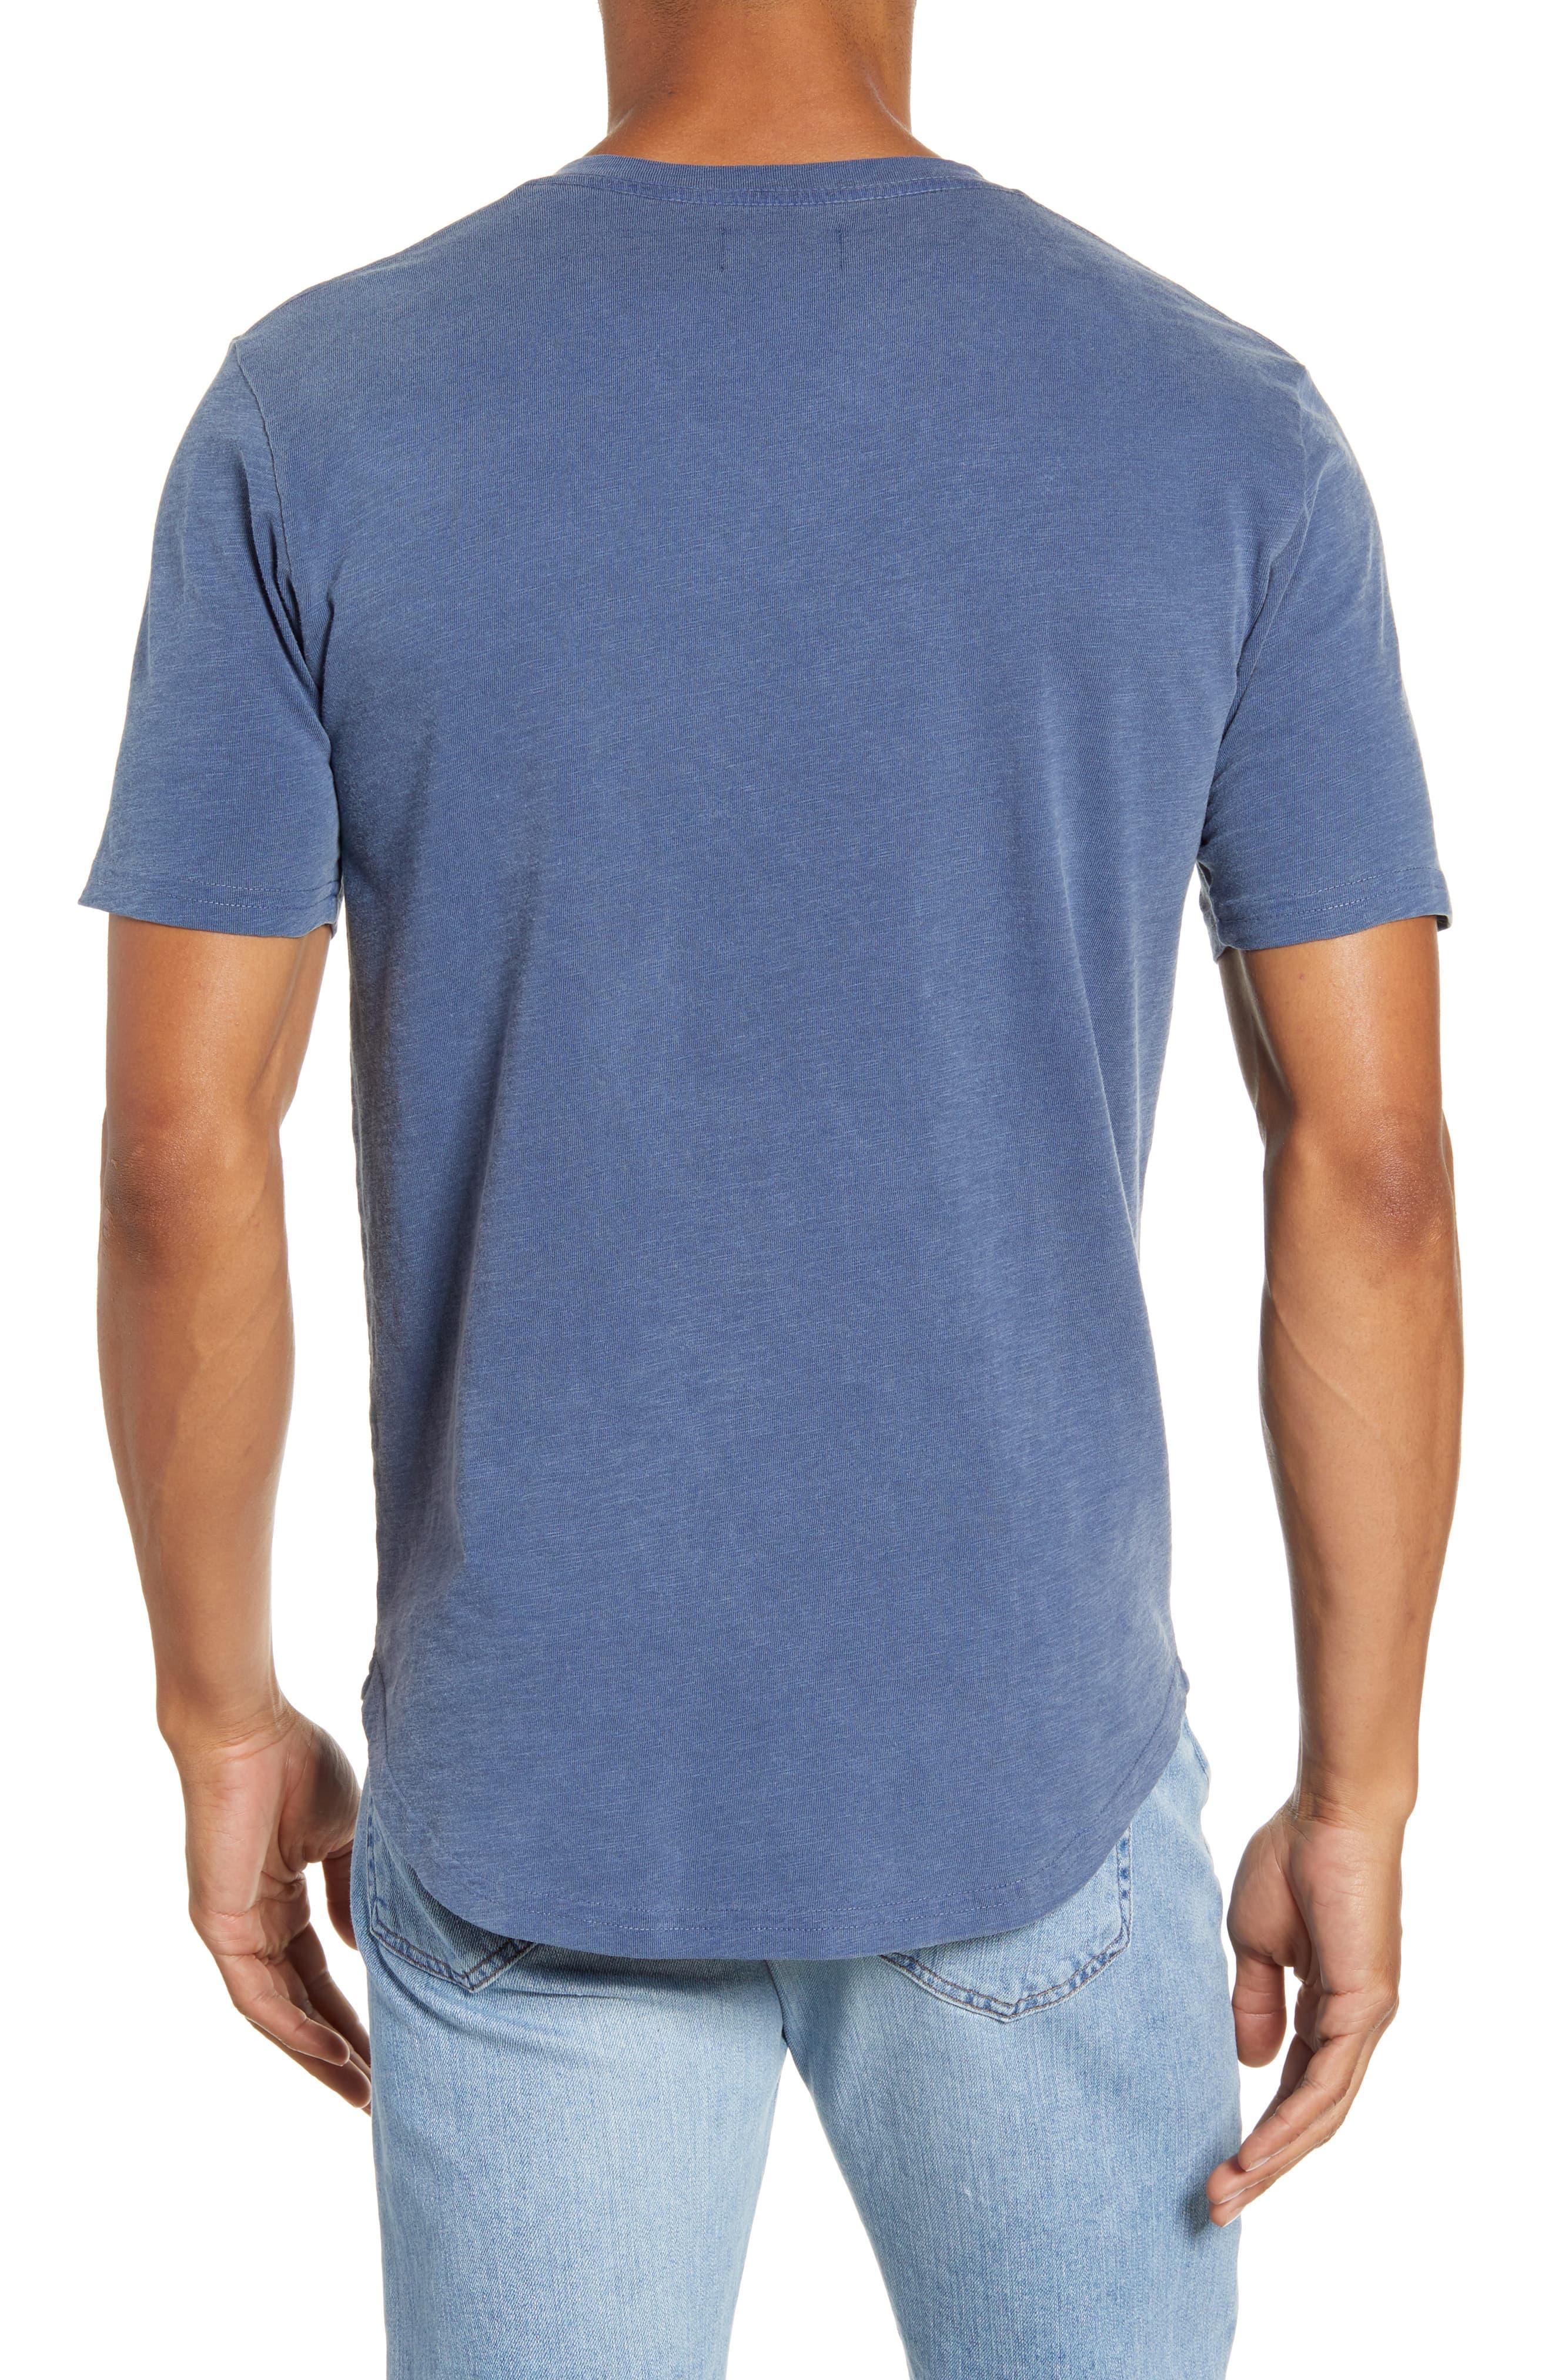 Goodlife Sun Faded Curved Hem Cotton Slub T-shirt in Blue for Men - Lyst